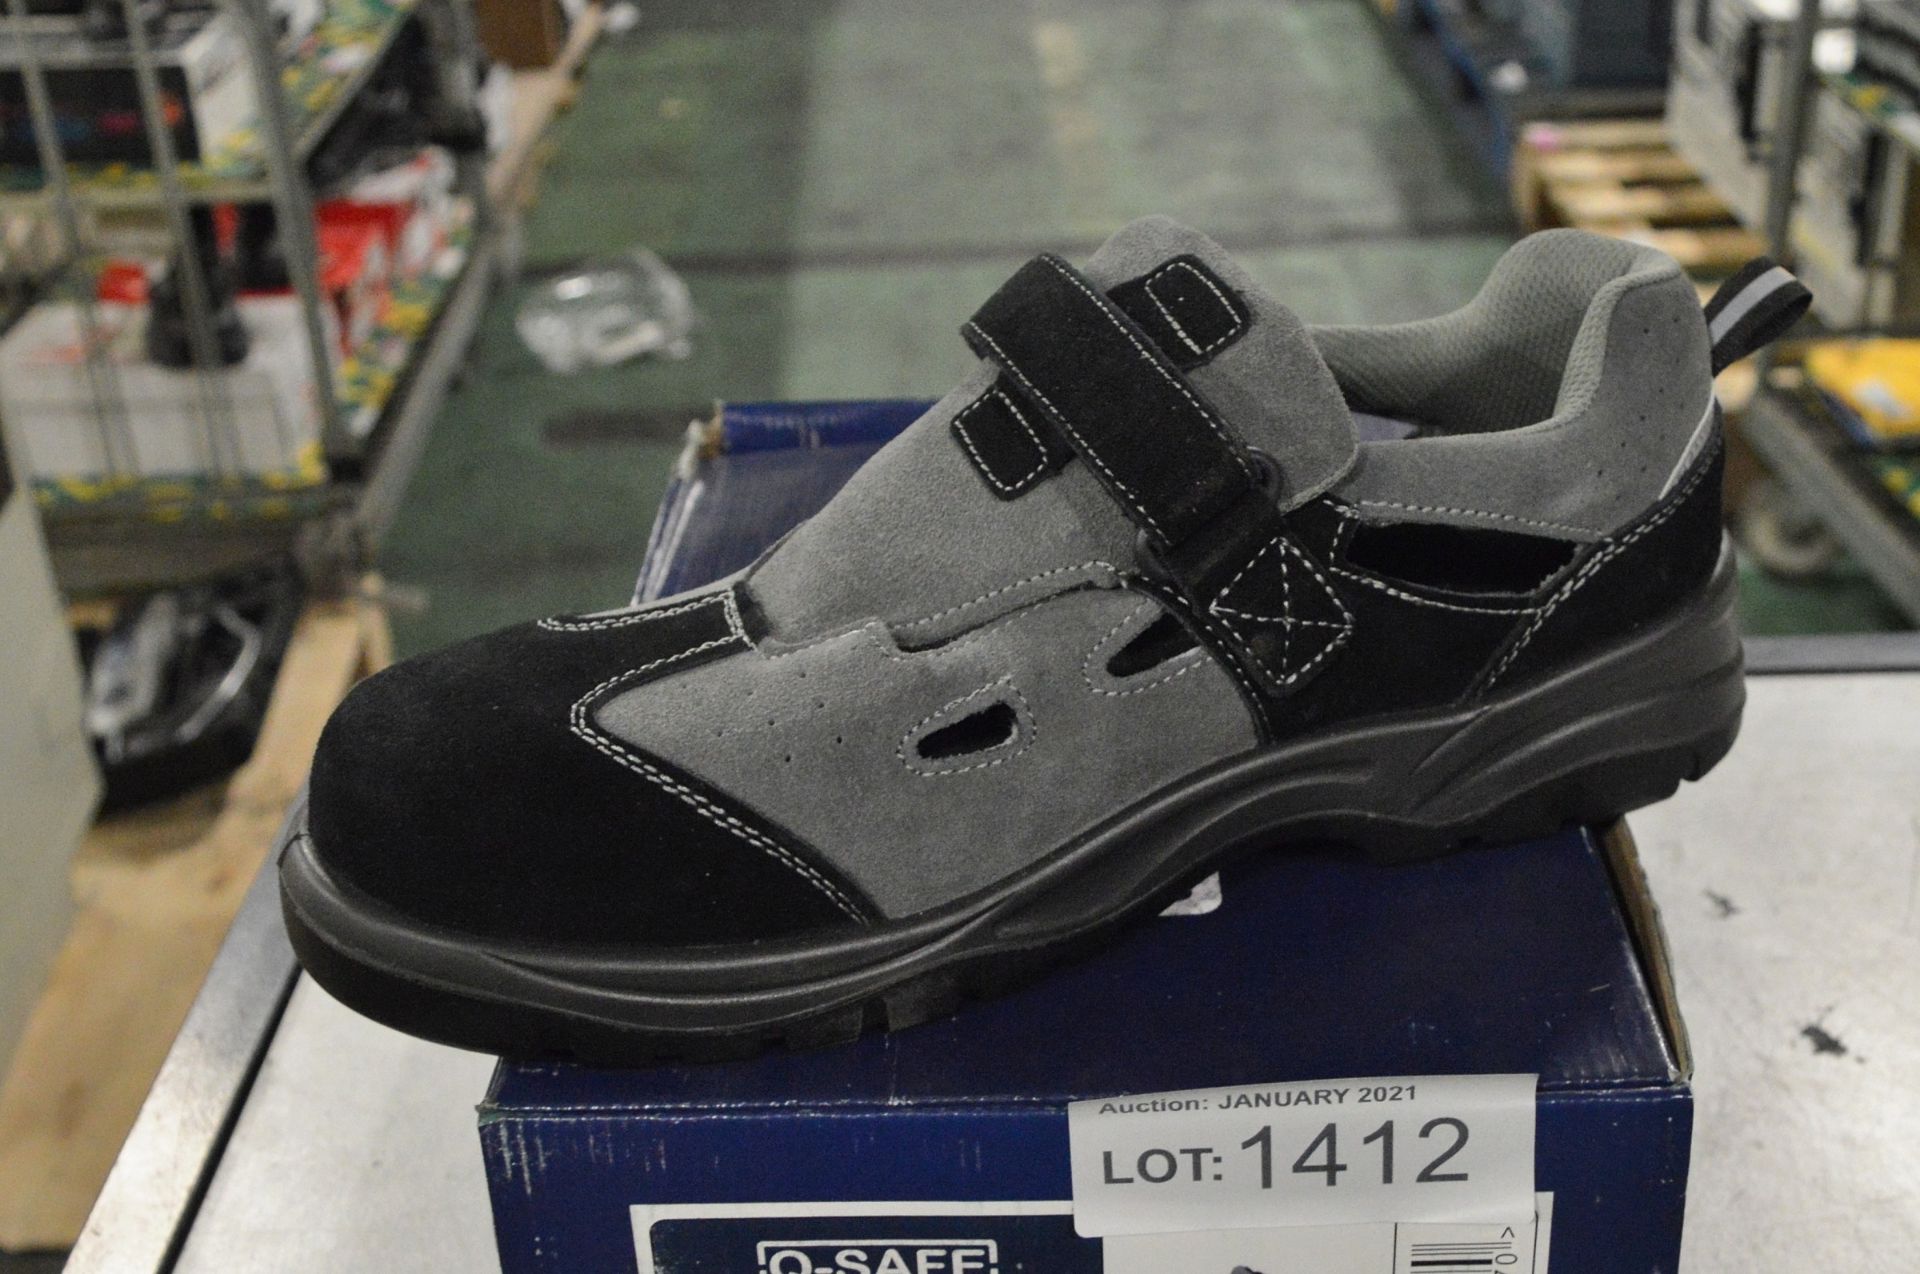 Safety shoes - Q-safe non metallic grey sandal QS7020 - 12UK 47EU - Image 2 of 2